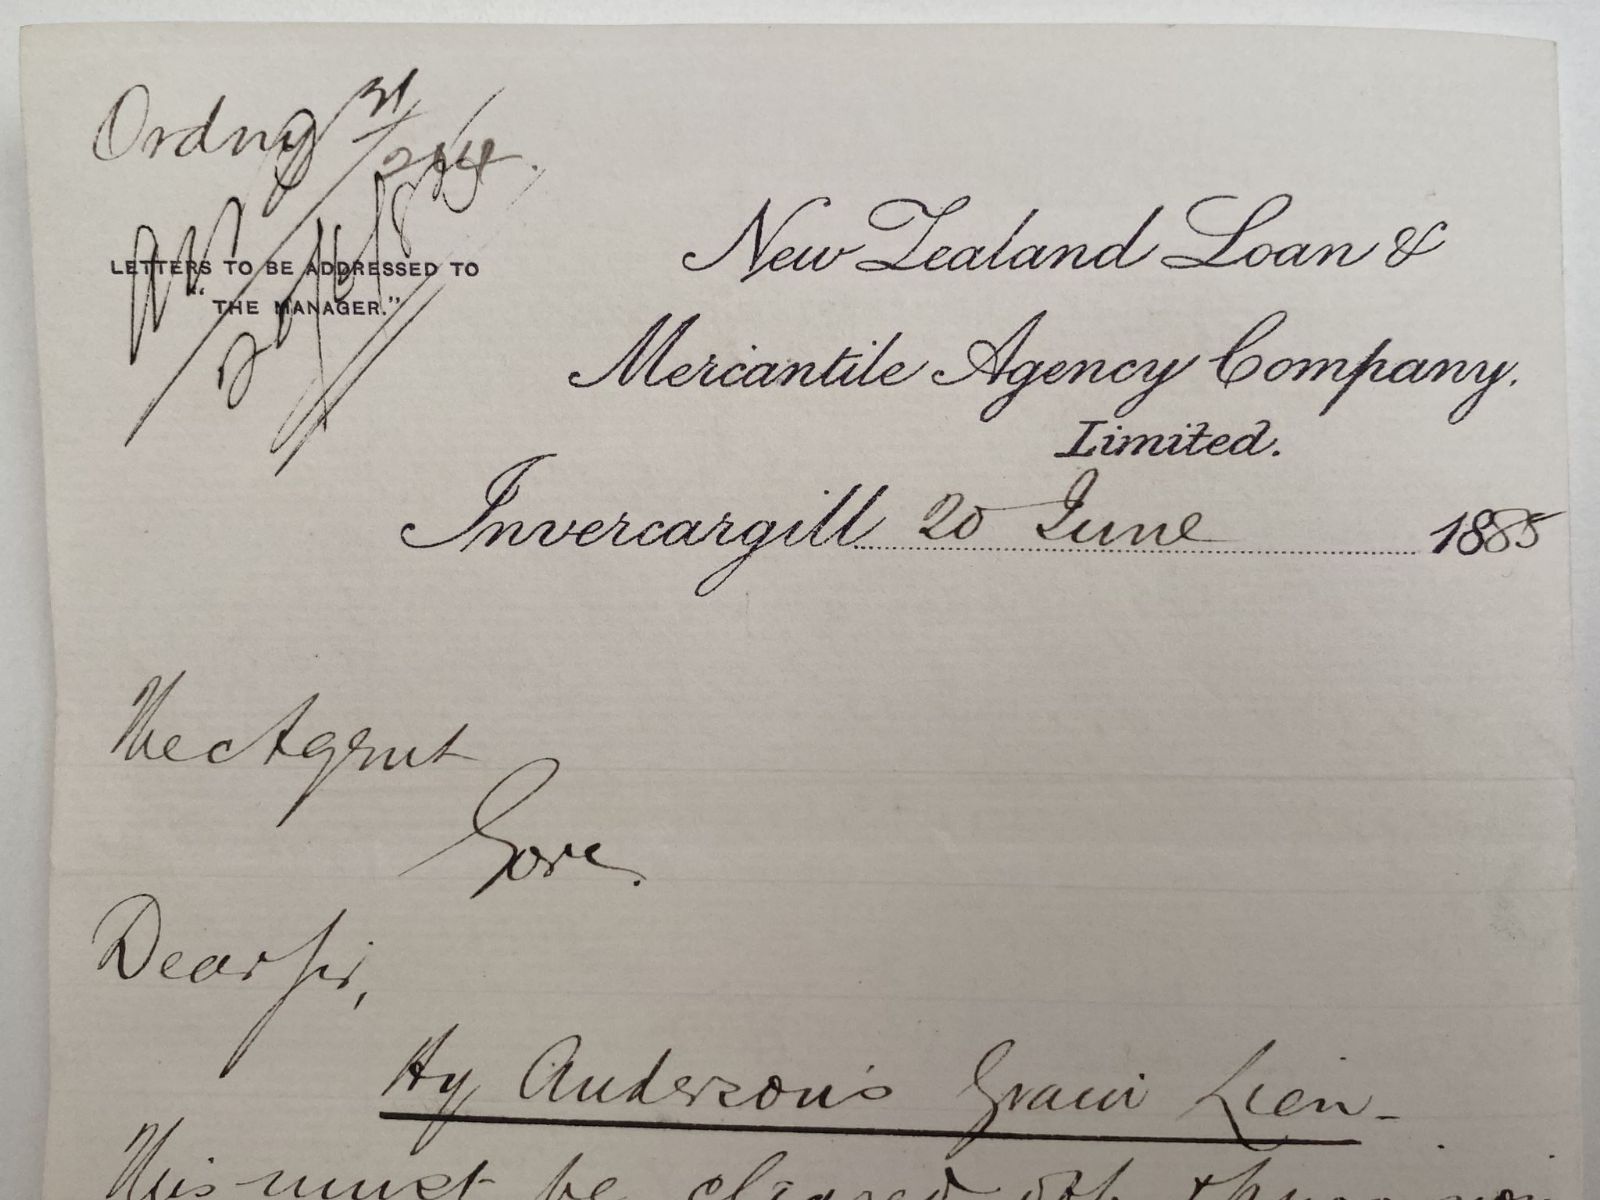 OLD LETTER: New Zealand Loan & Mercantile Agency Co. Invercargill 1885 (137 yo)